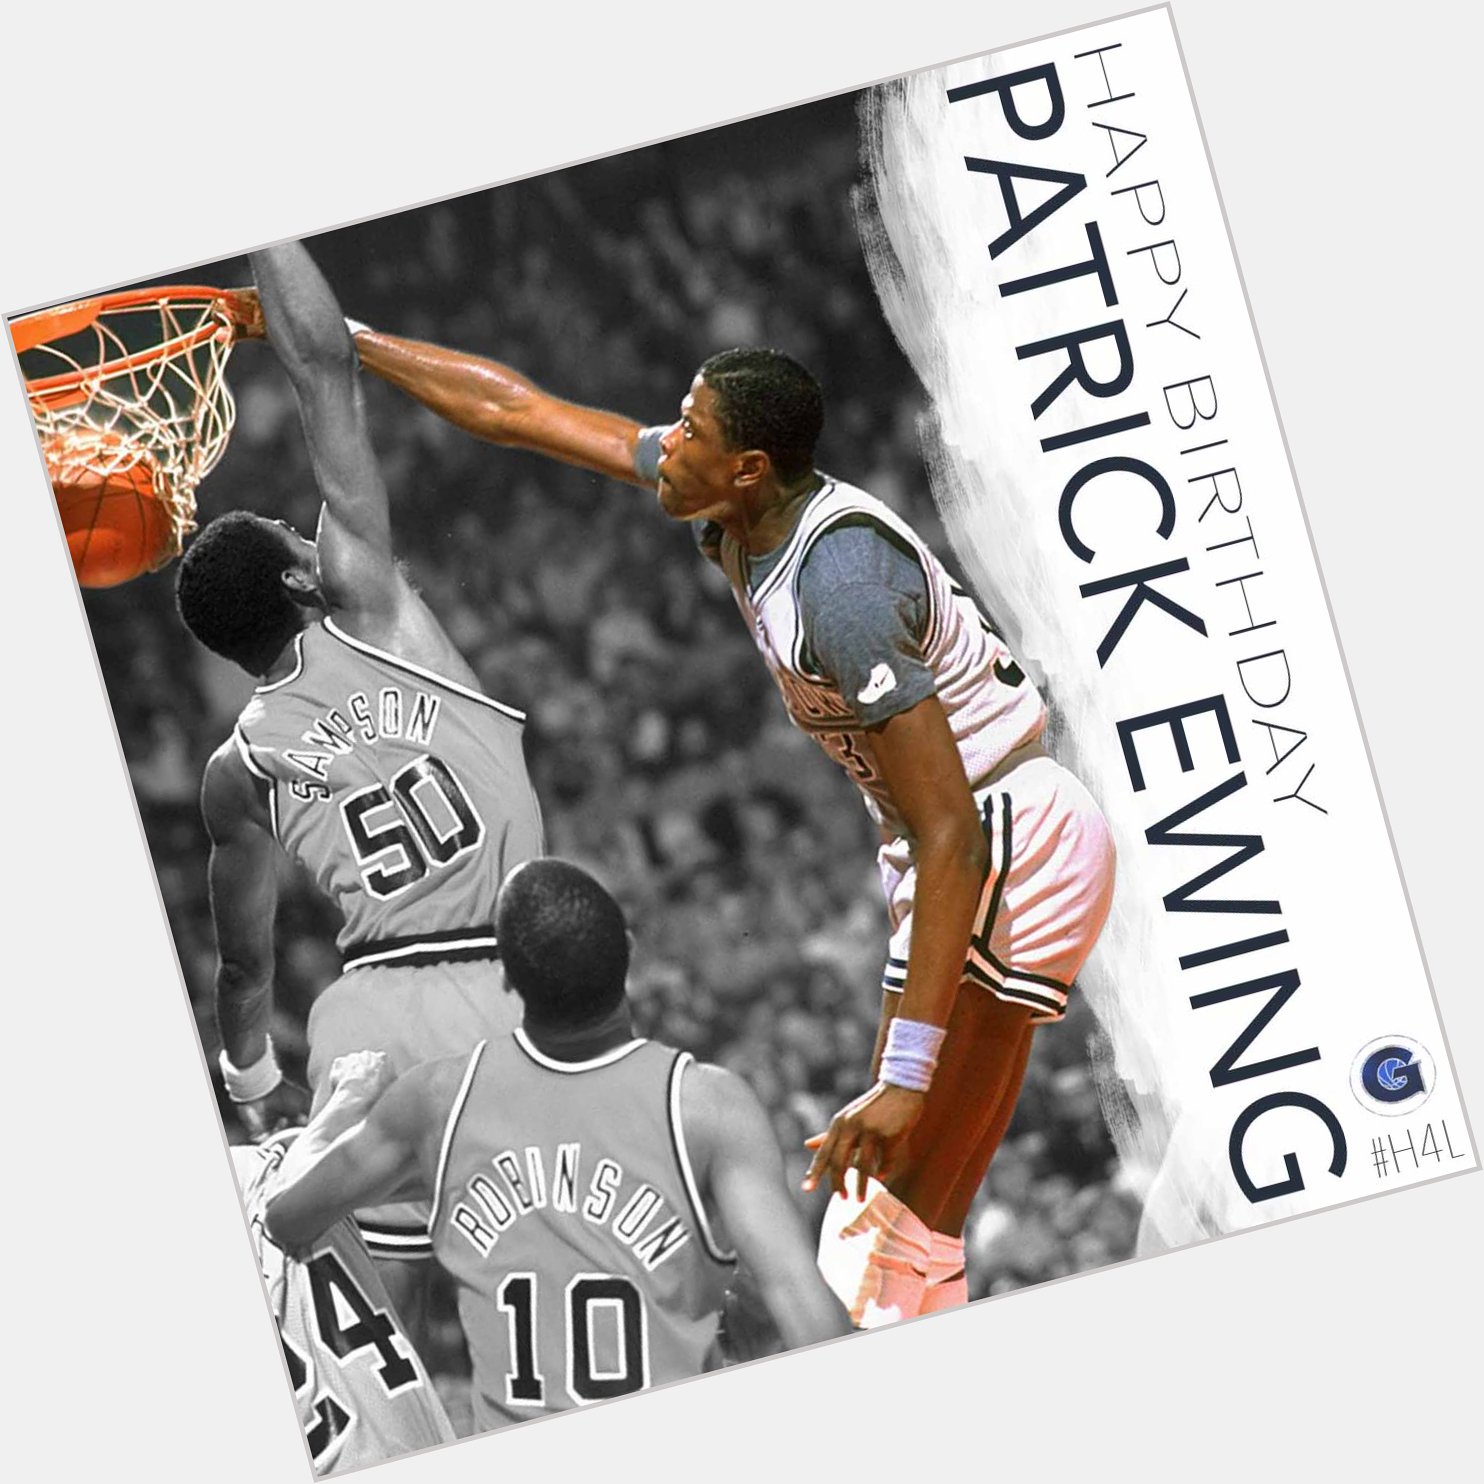 Happy Birthday, Patrick Ewing!!  